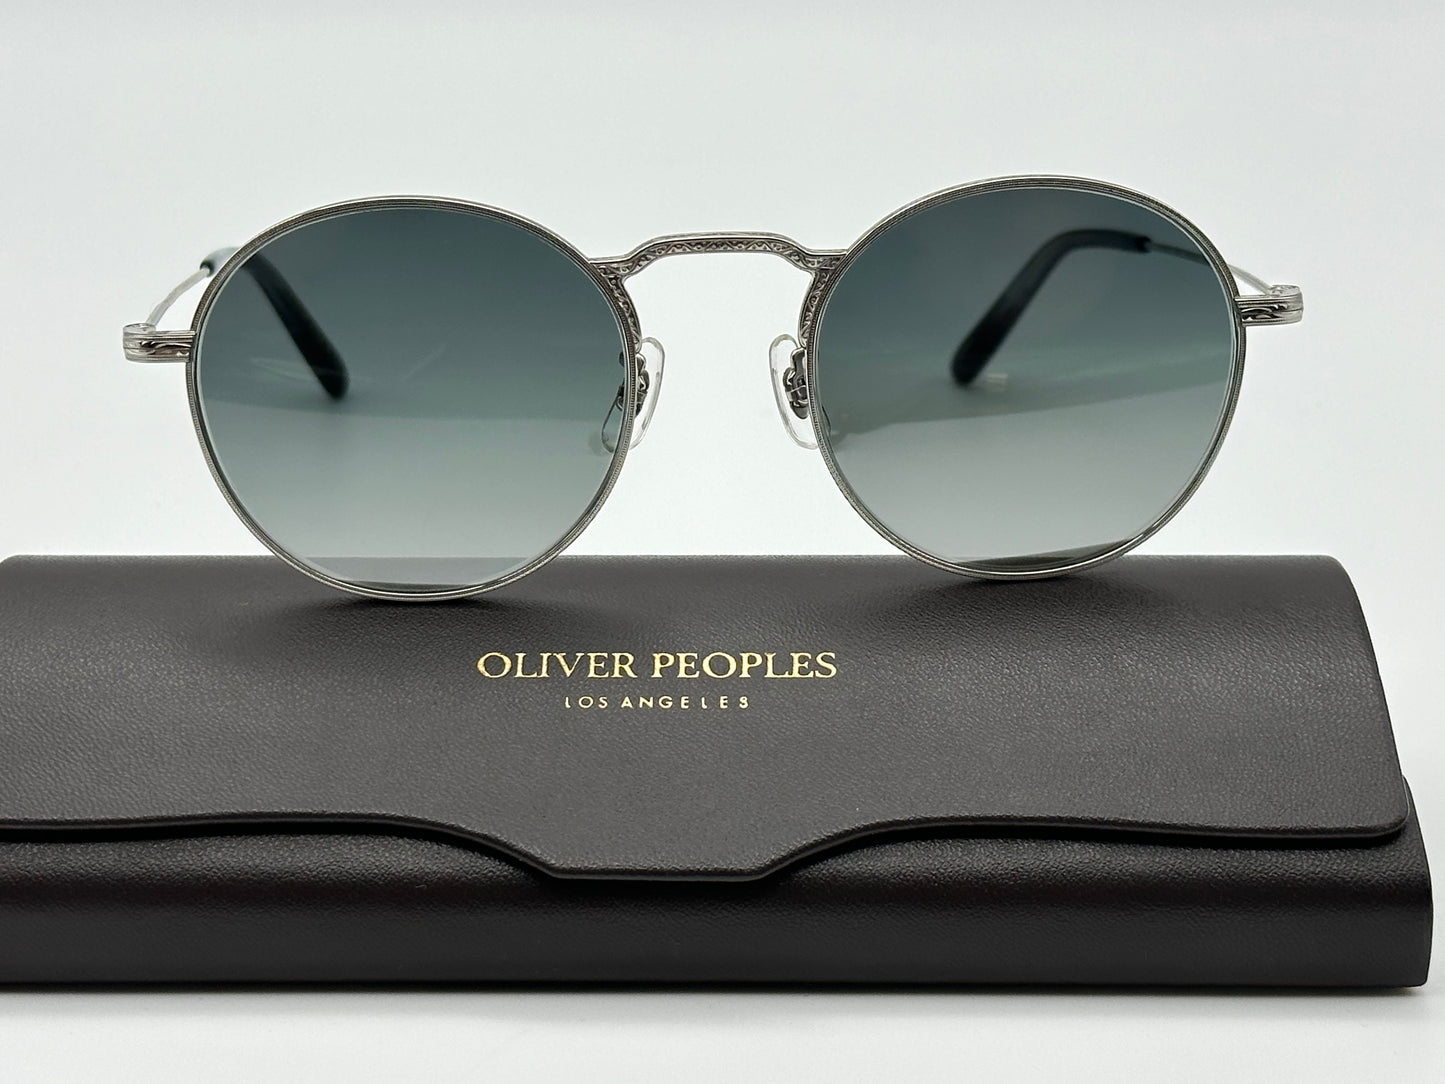 Oliver Peoples WESLIE 49mm Silver Titanium Steal Gradient OV 1282ST Made In Japan